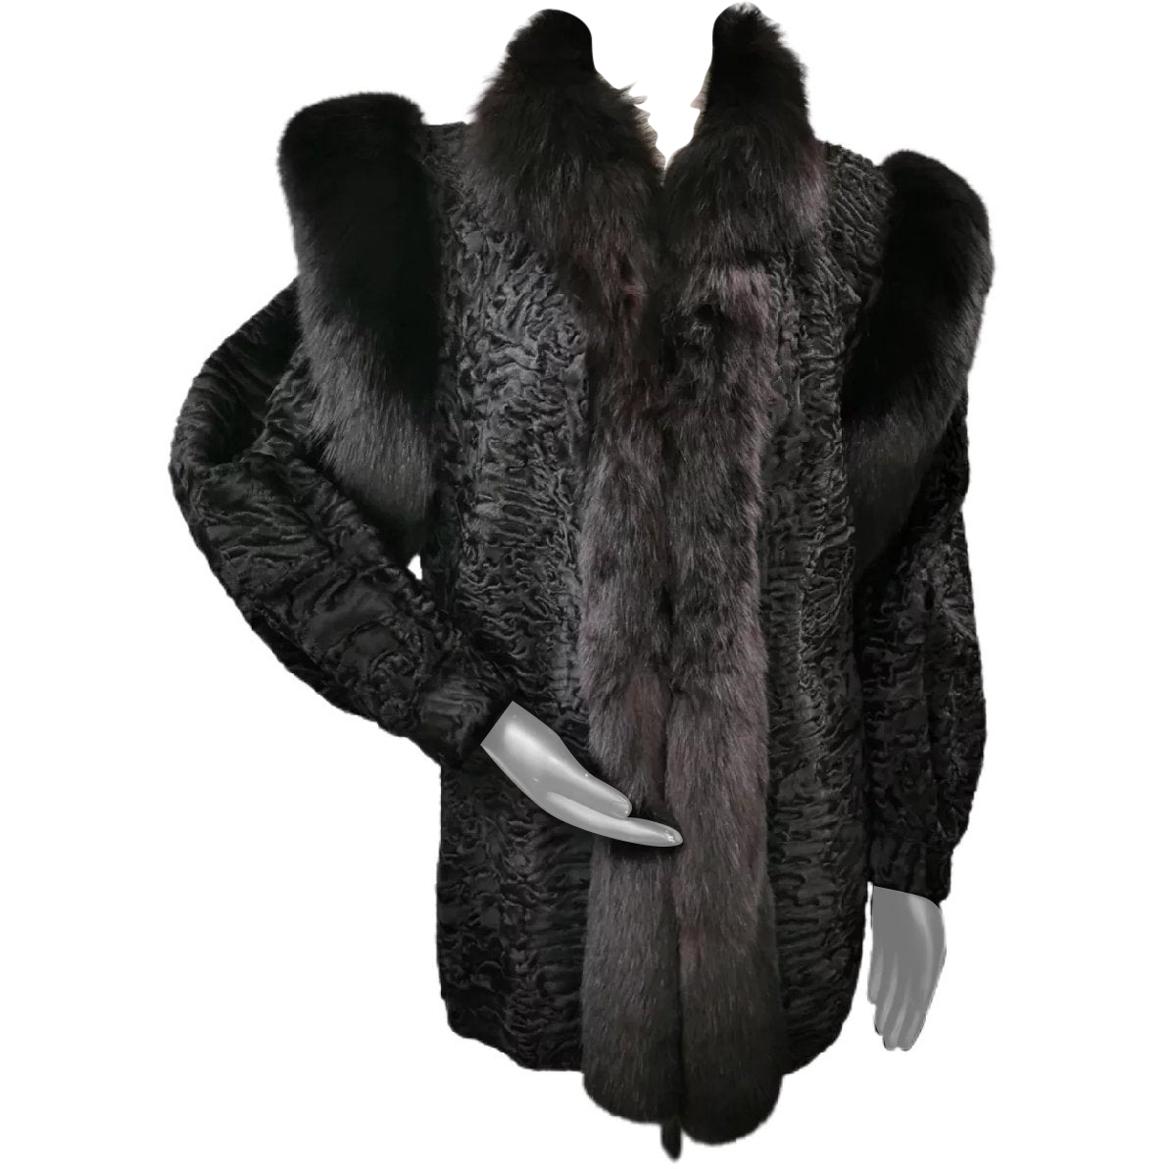 Swarkara broadtail fur with dyed shadow fox fur trim size 10 For Sale